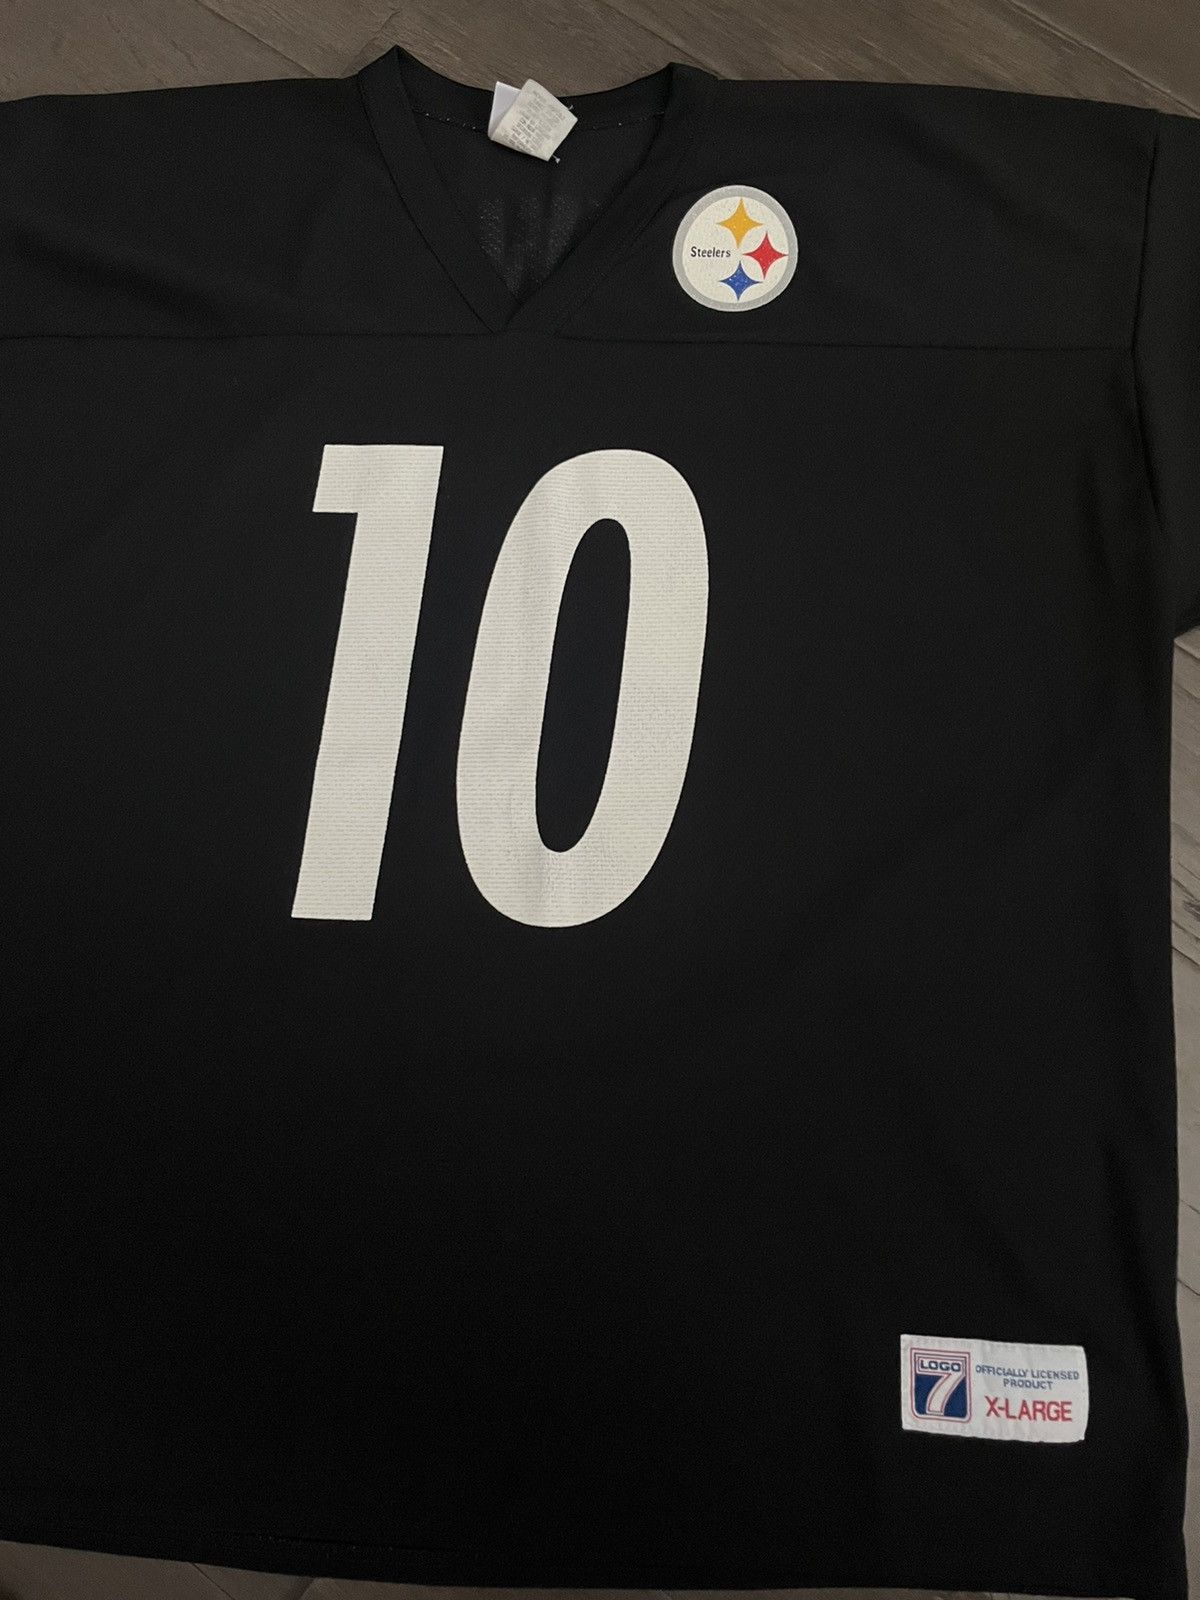 Vintage Vintage Kordell Stewart Pittsburgh Steelers jersey Logo 7 Size US XL / EU 56 / 4 - 2 Preview